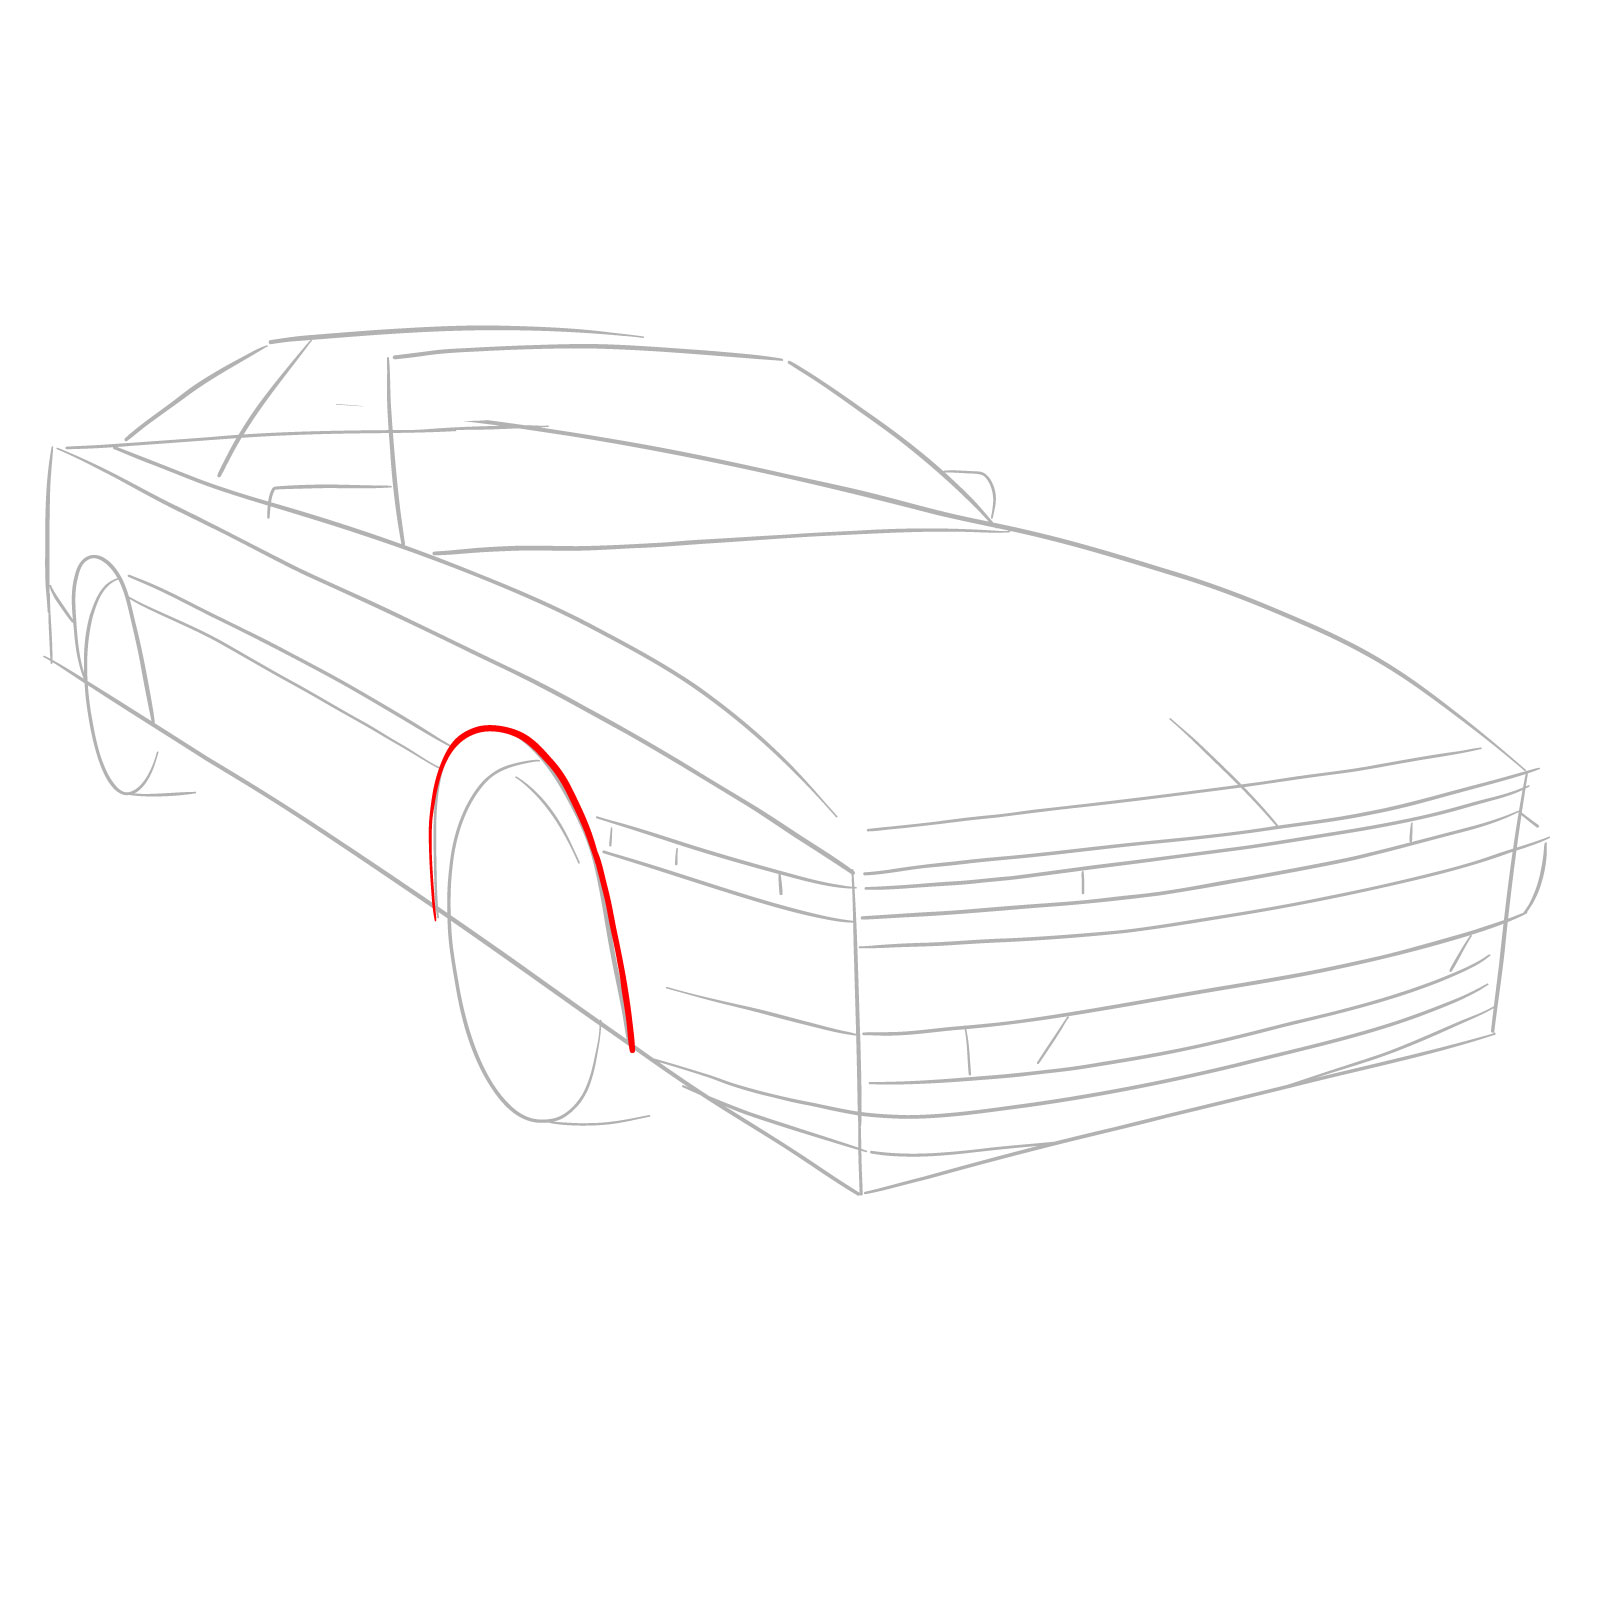 How to draw a 1988 Toyota Supra Turbo MK 3 - step 04